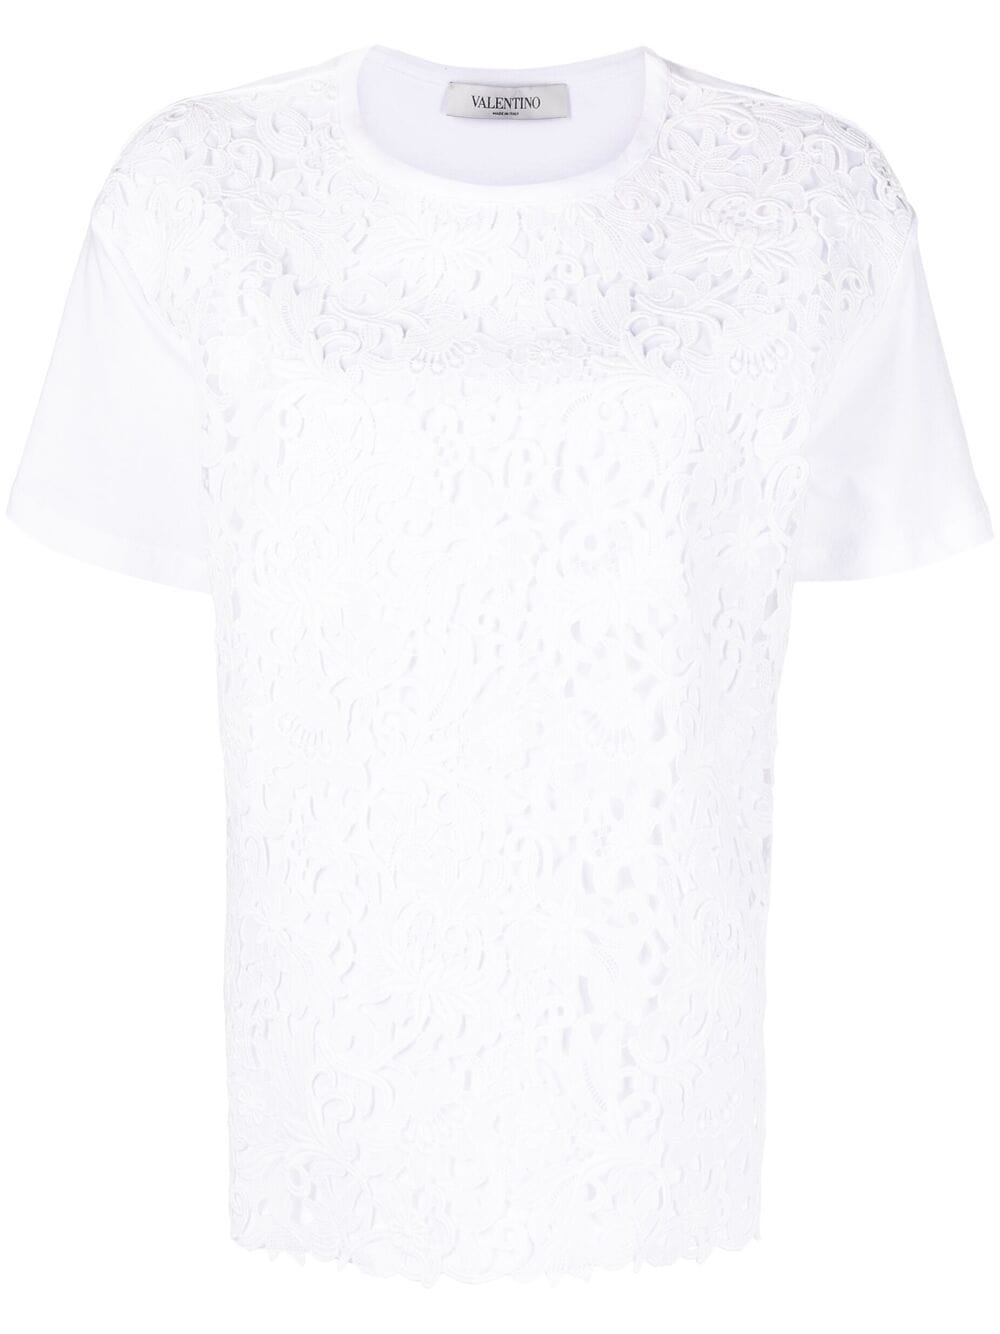 ＜Farfetch＞ Valentino ロゴプリント Tシャツ - ホワイト